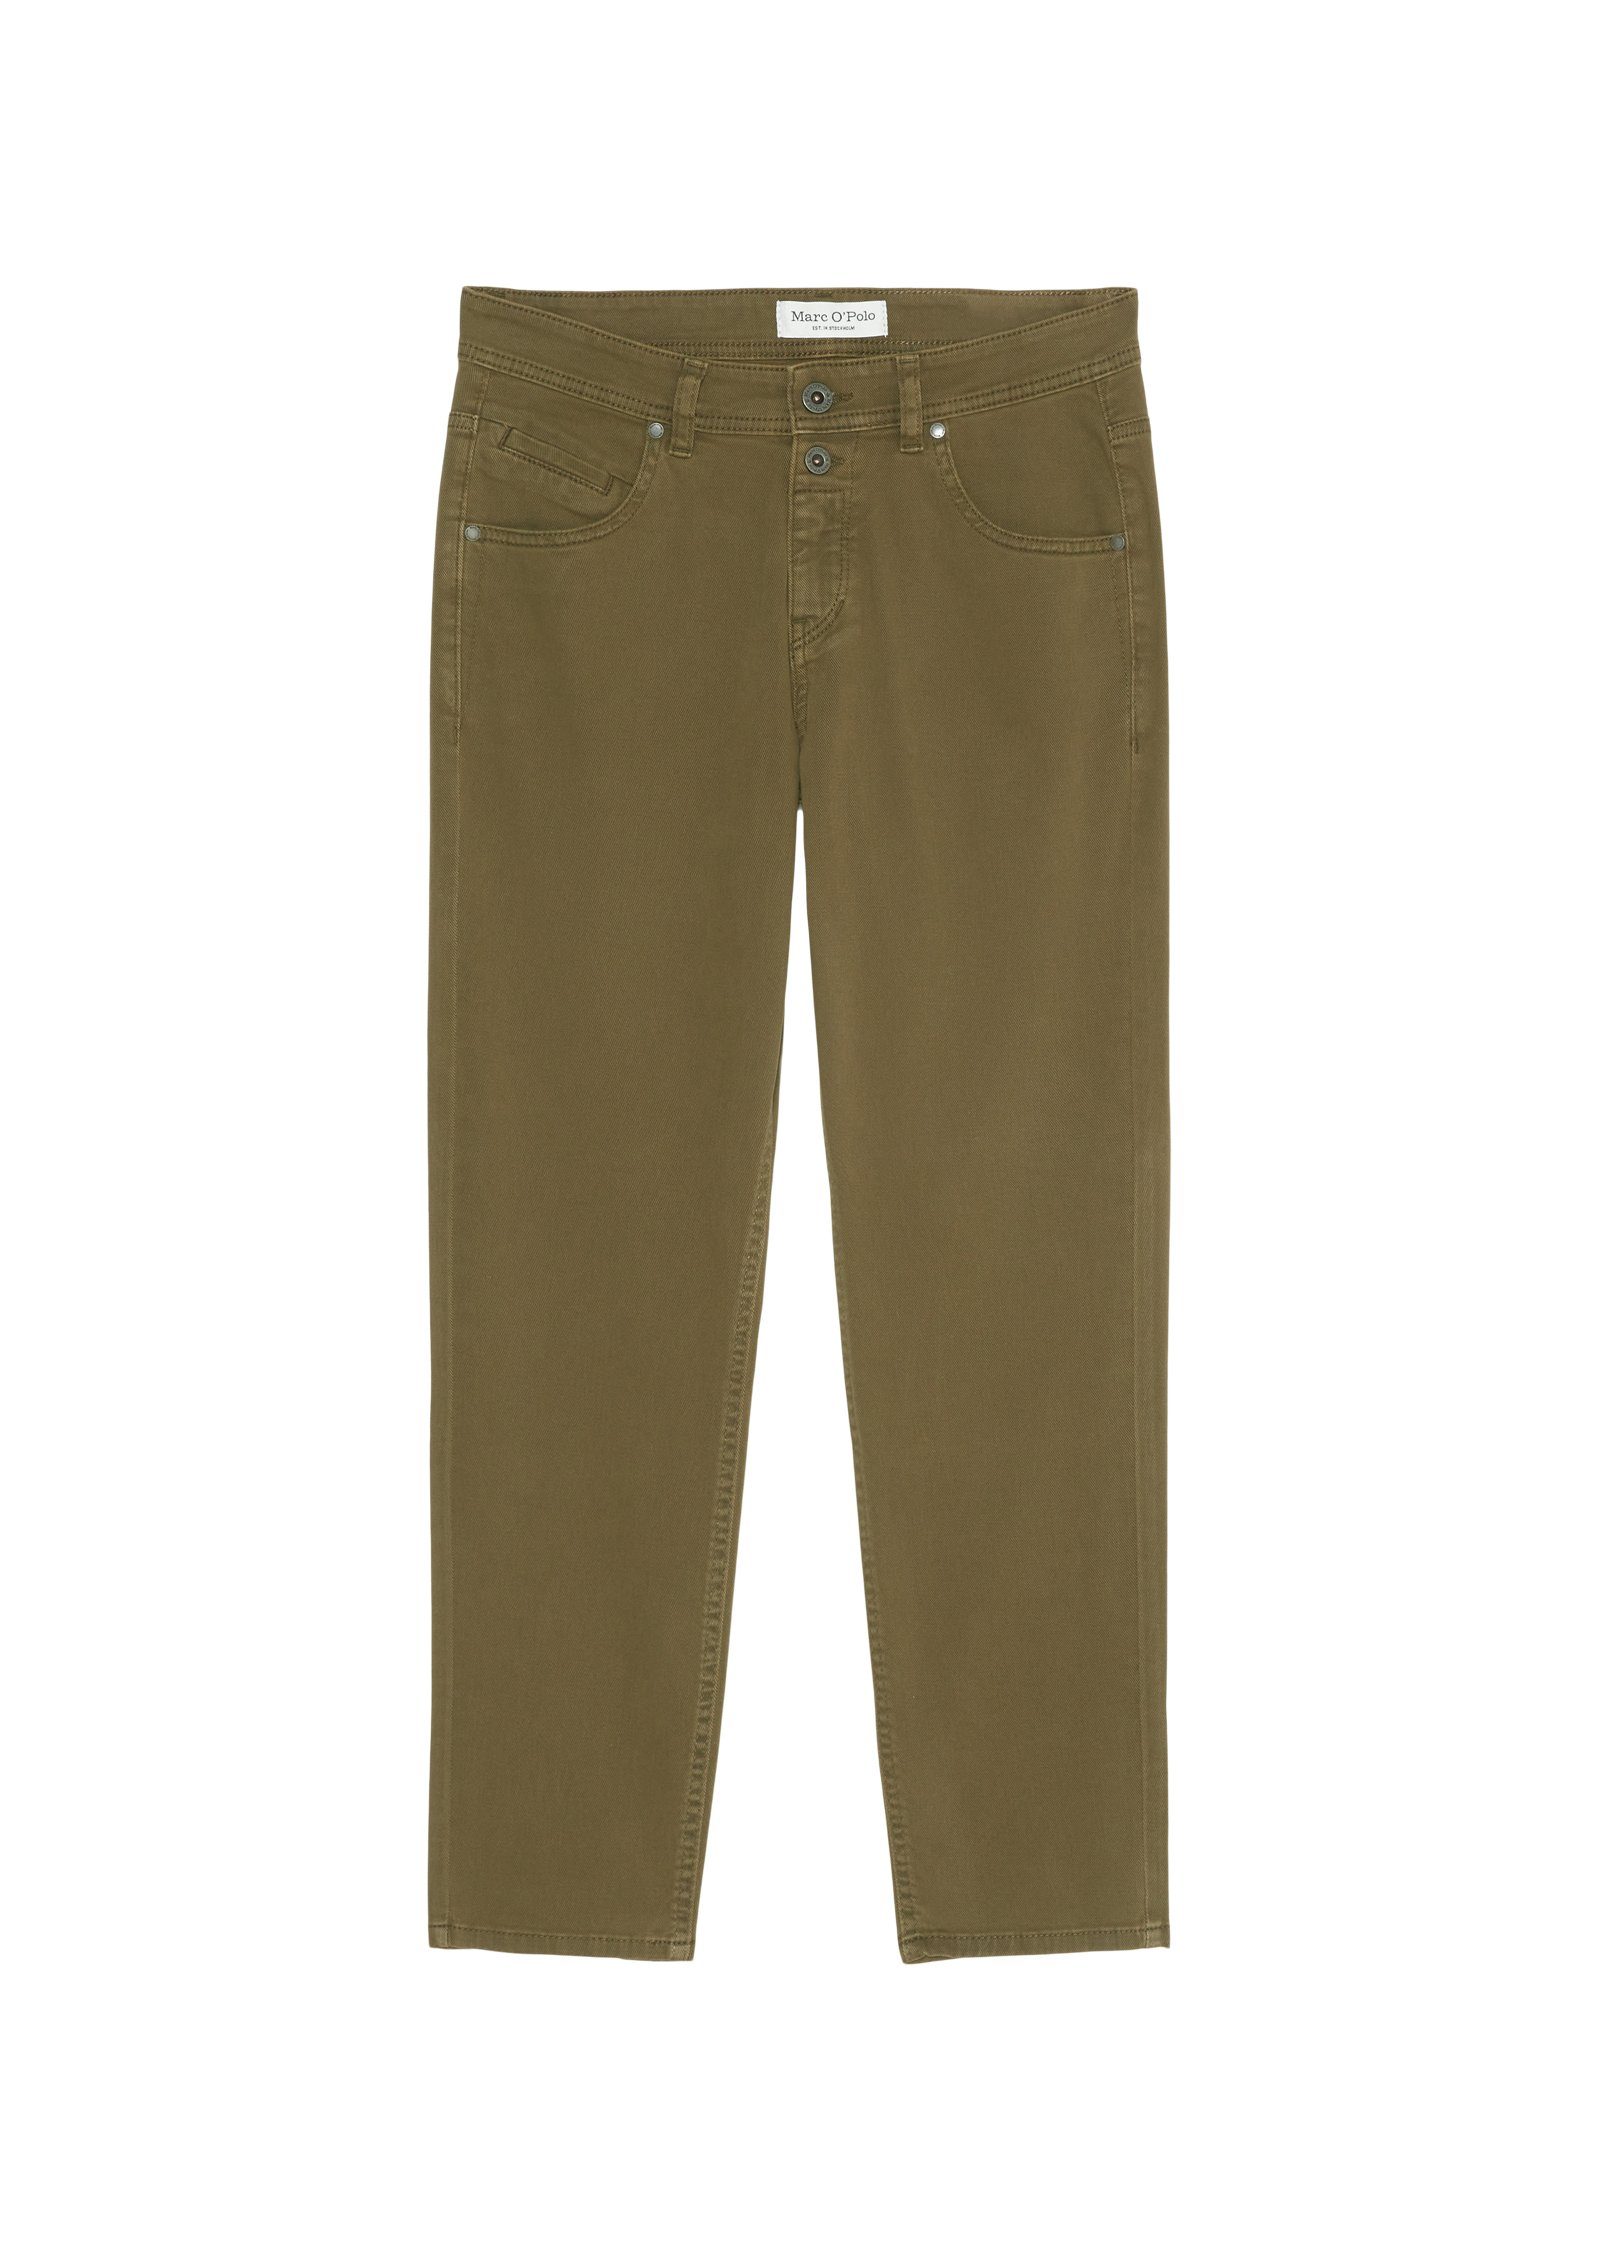 Marc O'Polo 5-Pocket-Jeans 5Pocket, boyfriend fit, cropped len forest floor